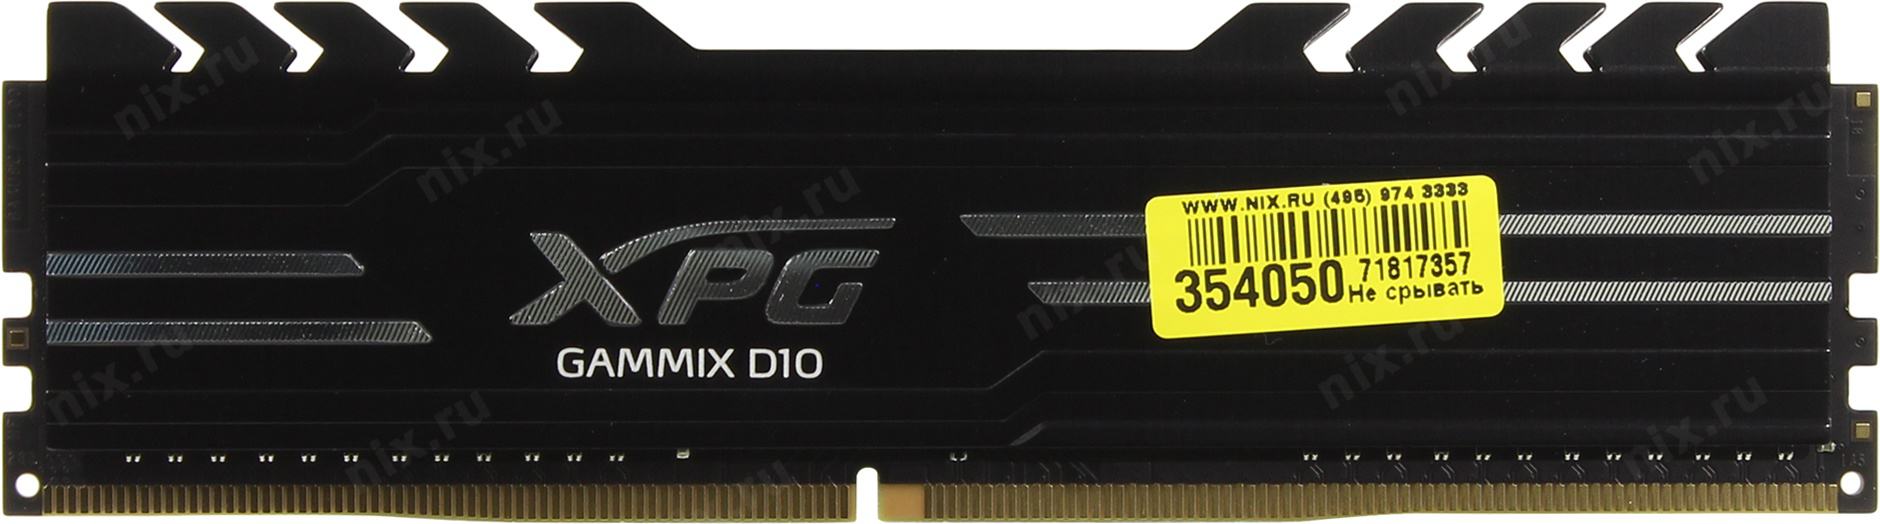 Оперативная память adata d10. Оперативная память GAMMIX d10 обои. Оперативная память XPG GAMMIX d10 обои egjrjdrb. DDR-10w-100r.